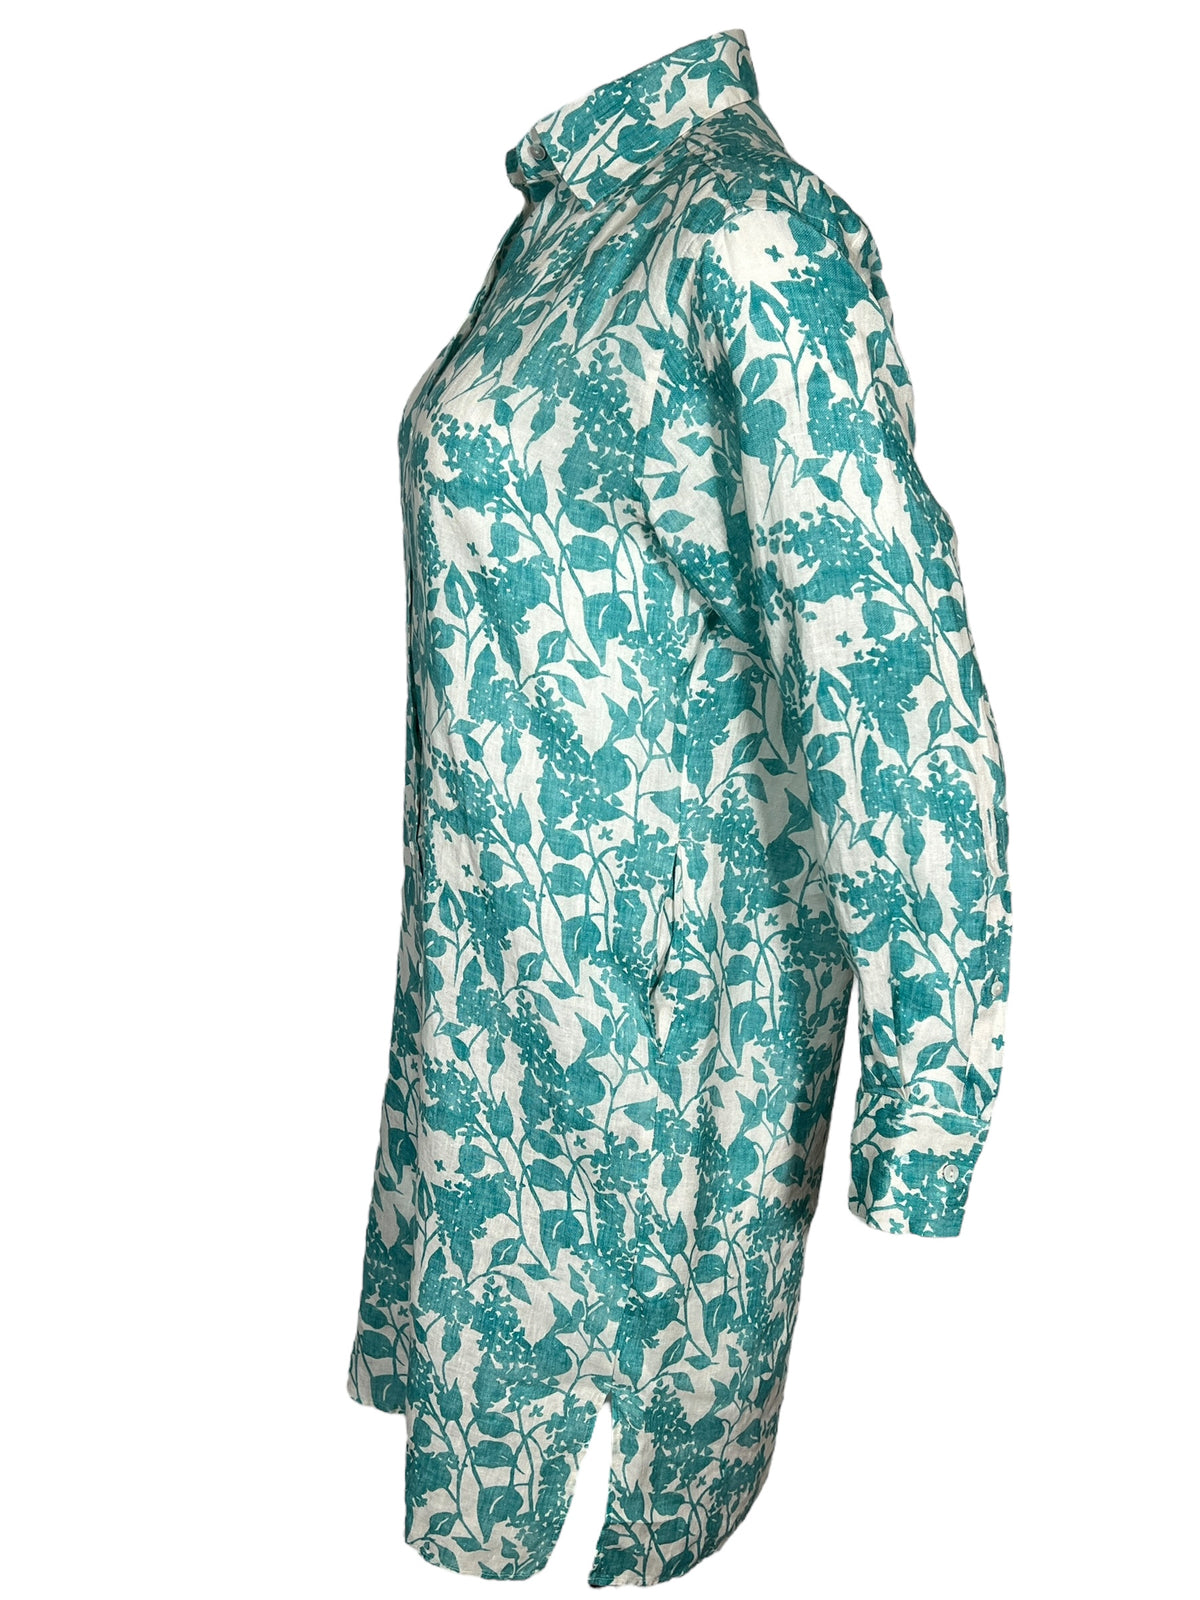 XACUS FLORAL PRINT SHIRT DRESS - TURQUOISE